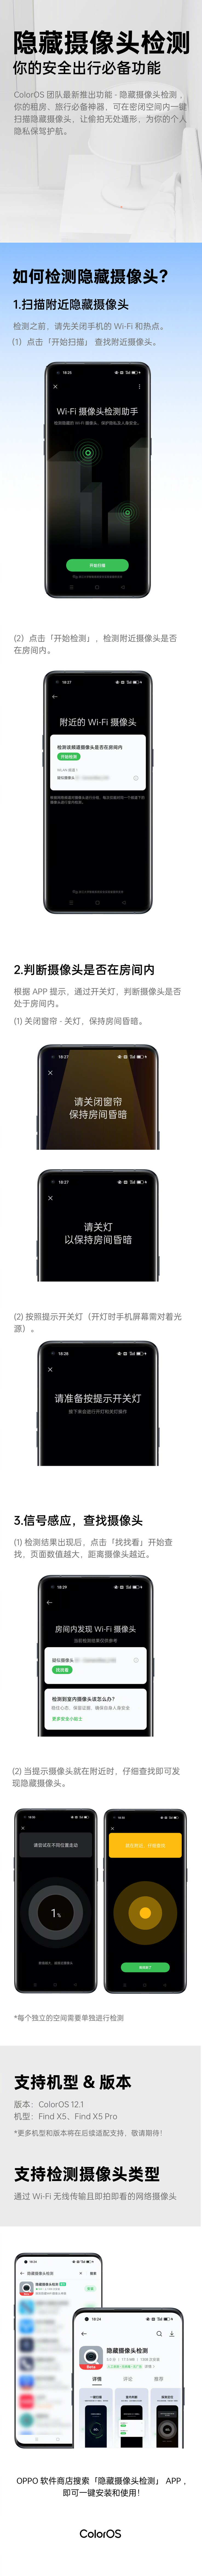 A nova câmera oculta da OPPO apresenta infográficos. (Fonte: OPPO via Weibo)